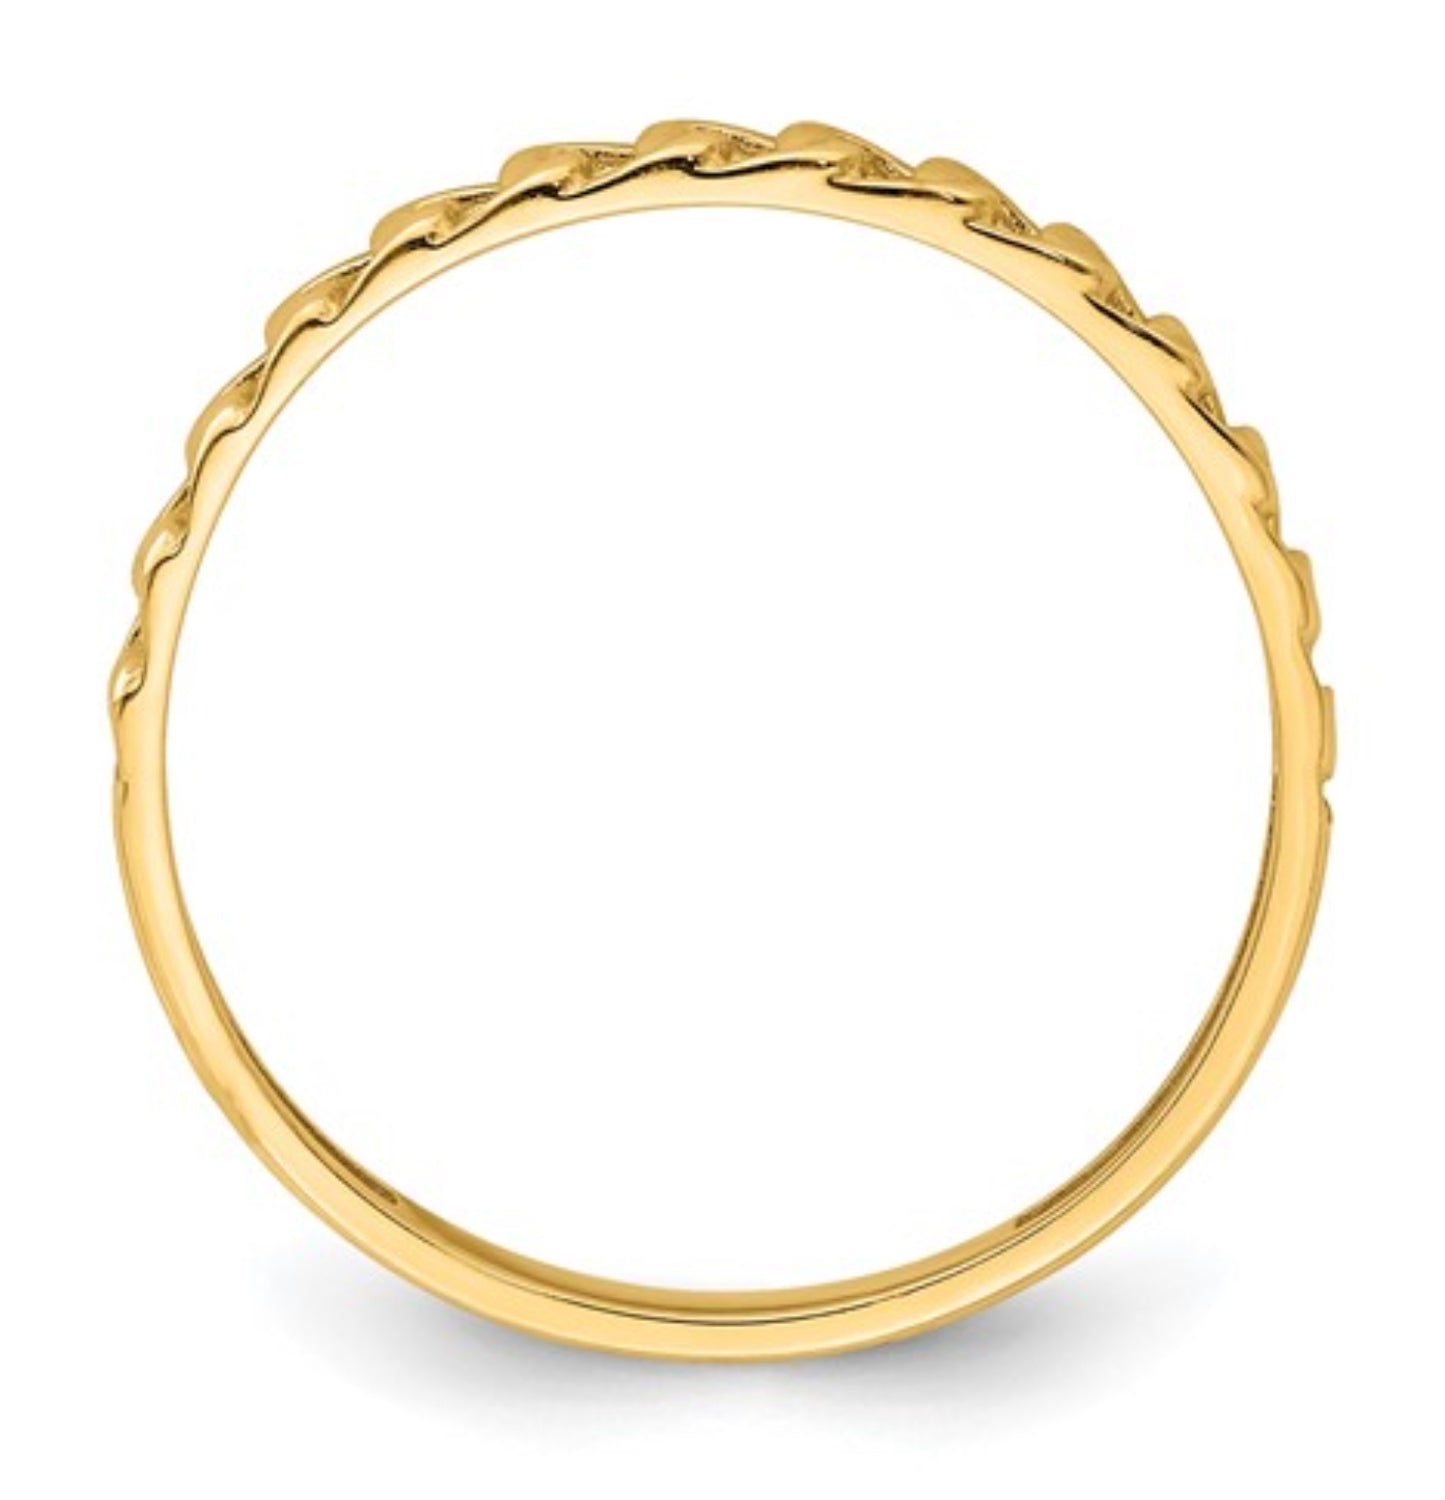 14k Yellow Gold Thin Curb Band Ring